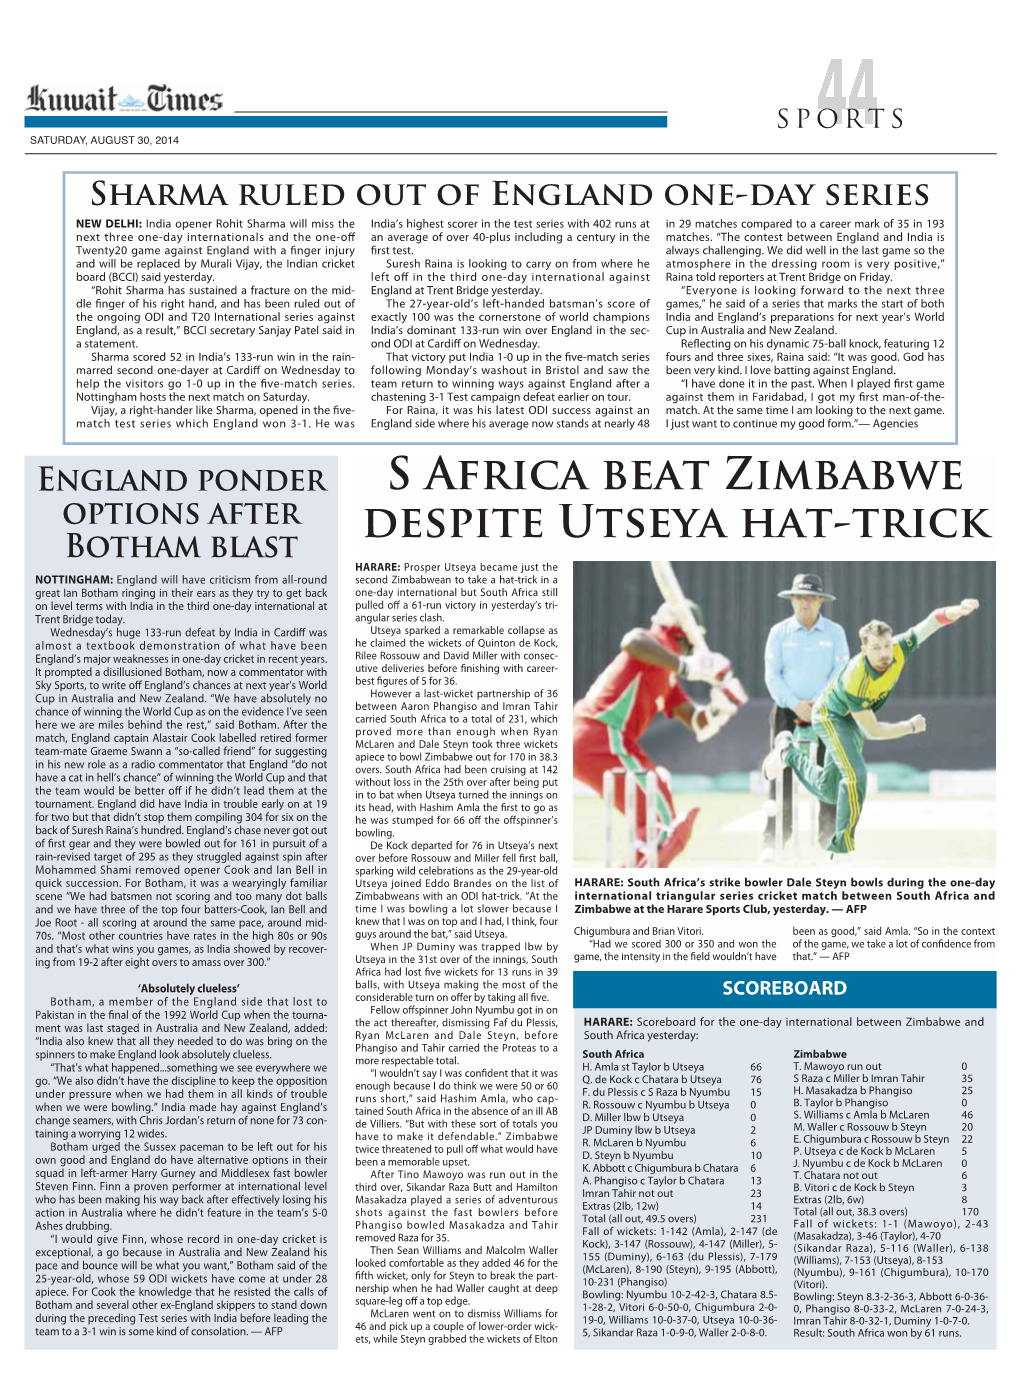 S Africa Beat Zimbabwe Despite Utseya Hat-Trick